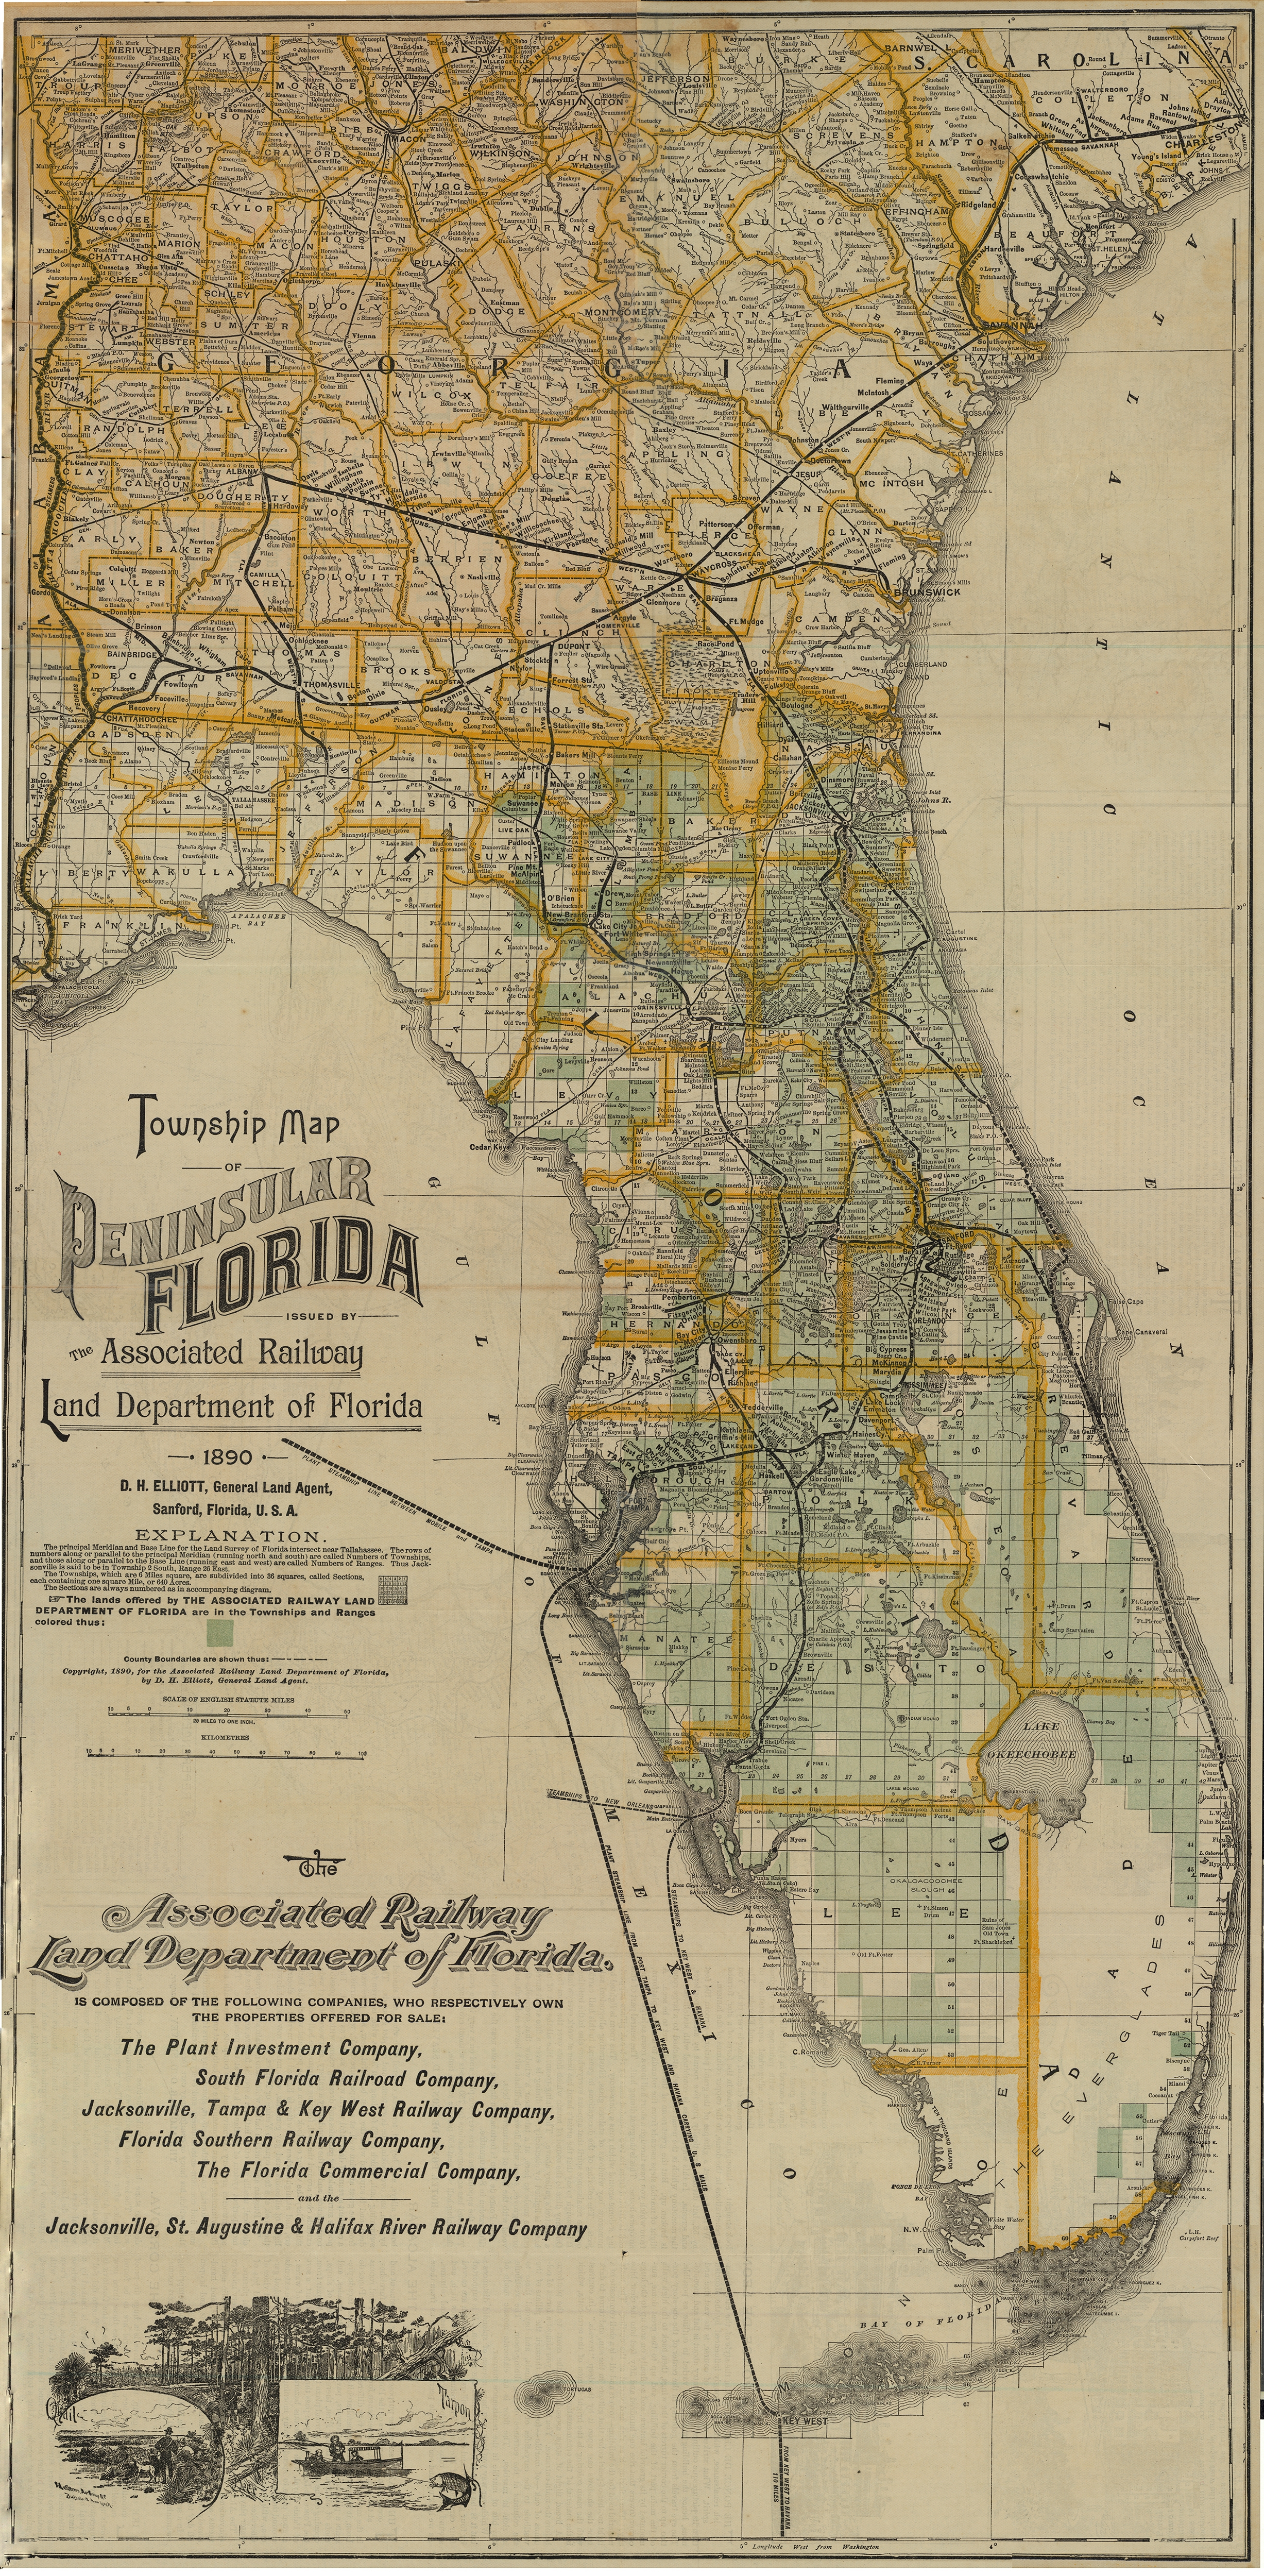 Florida Memory - Florida Maps - Browseimage - Old Florida Maps For Sale